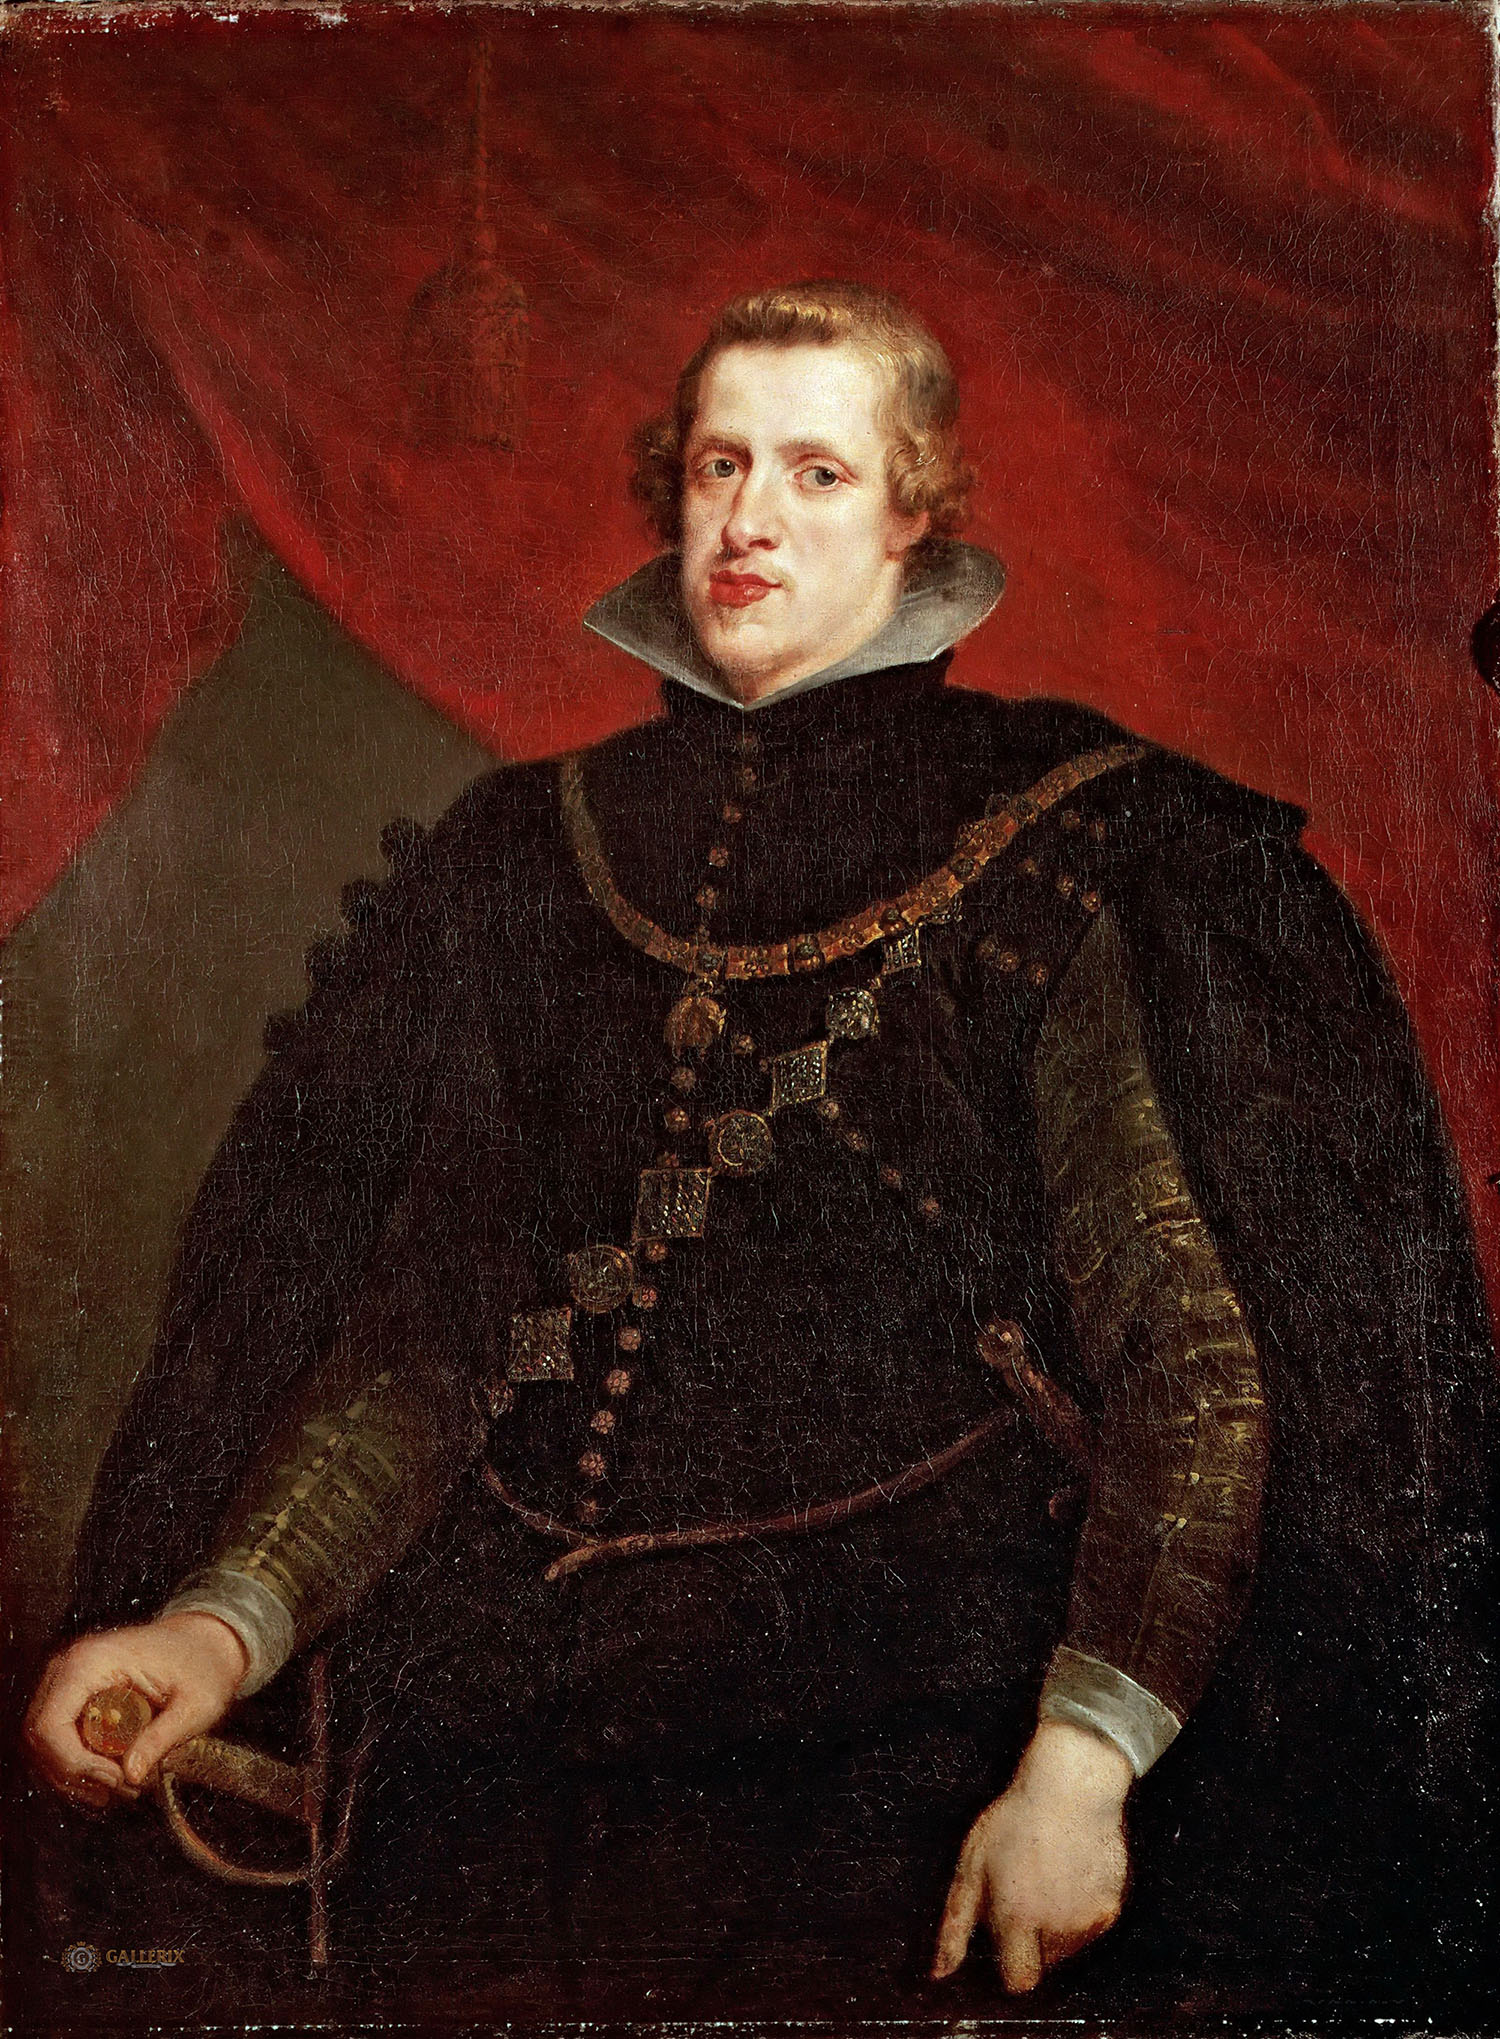 Питер Пауль Рубенс. "Филипп V, король Испании". Старая пинакотека, Мюнхен.